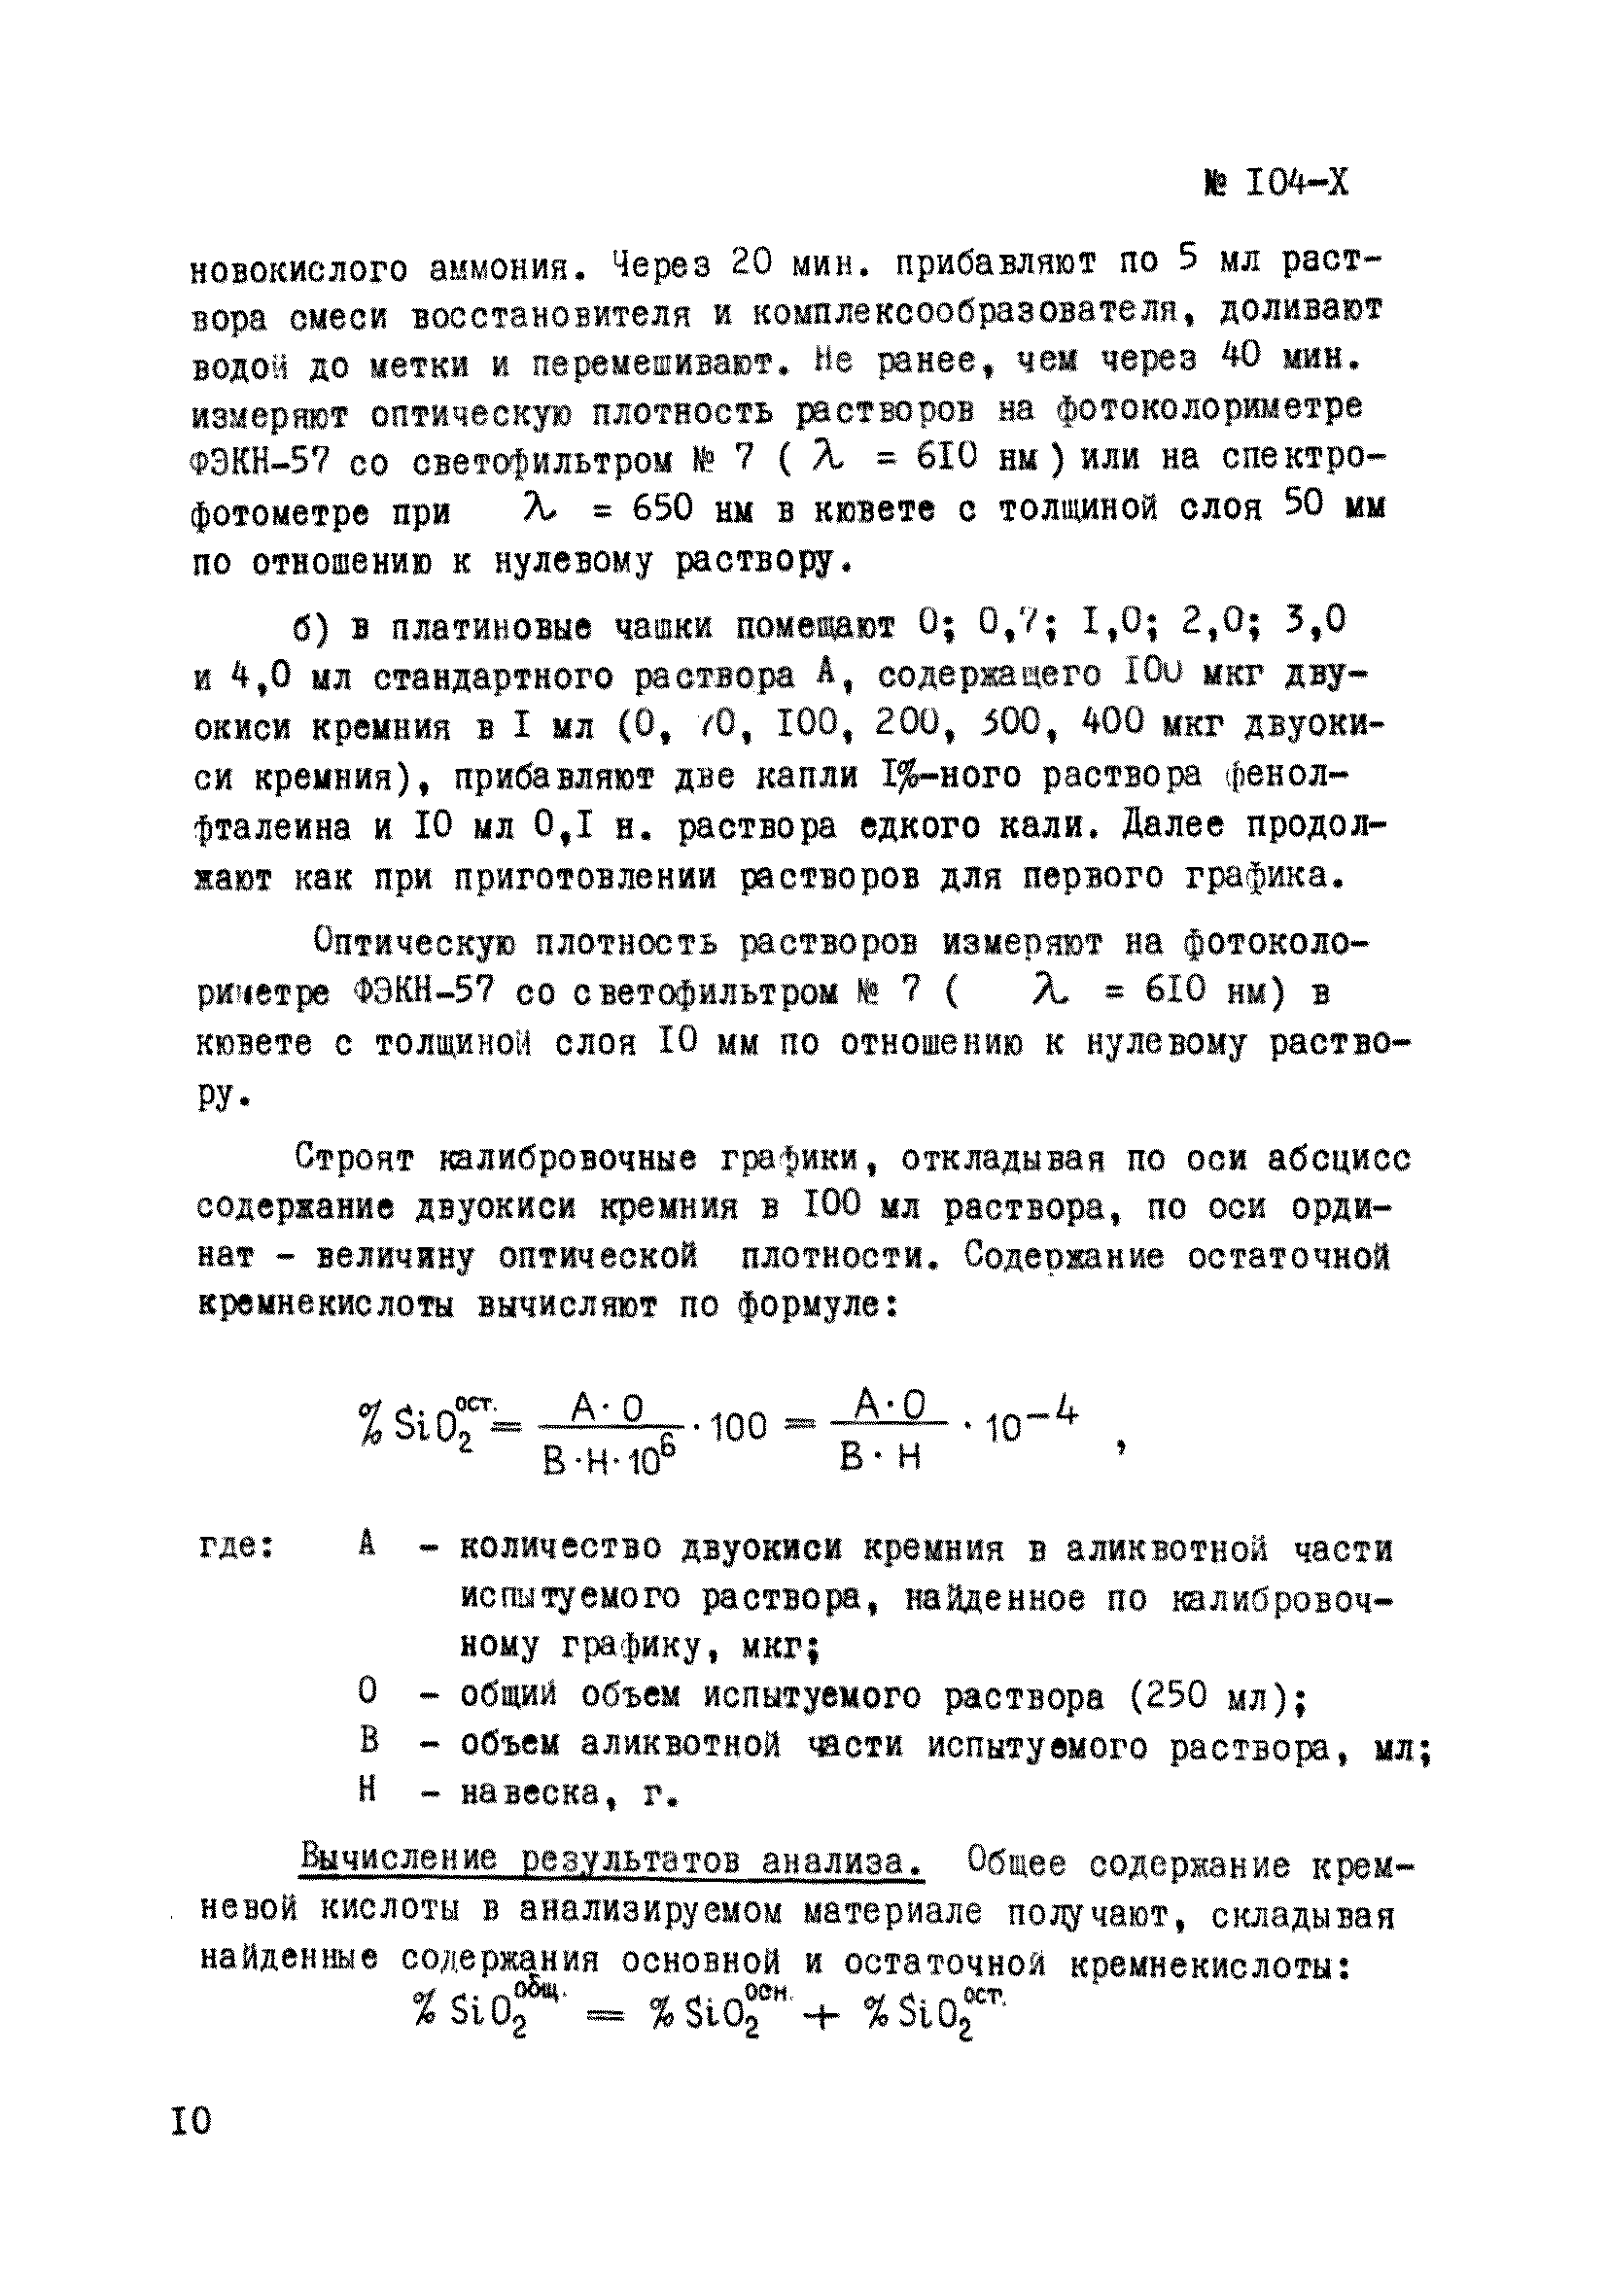 Инструкция НСАМ 104-Х